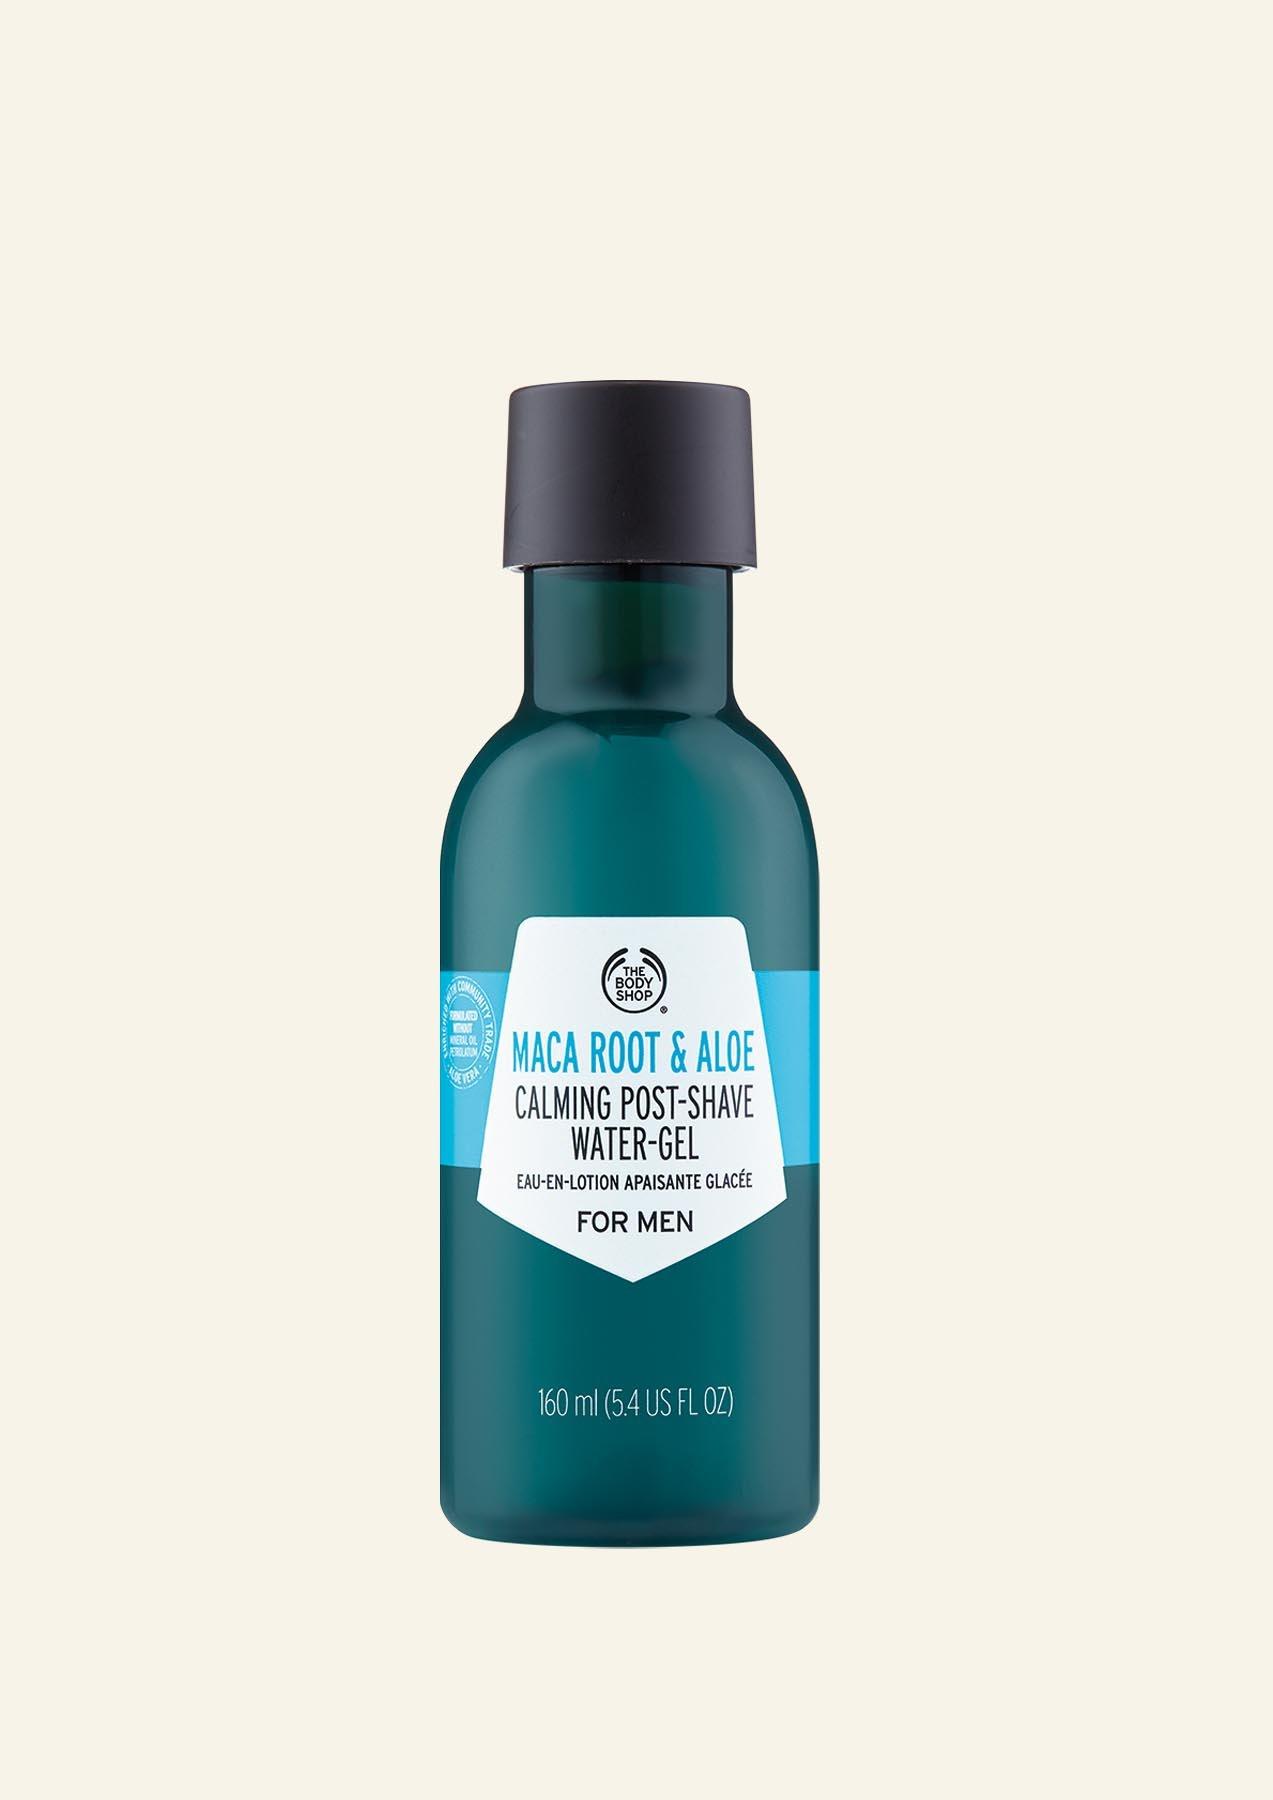 Maca Root & Aloe Post-Shave Water-Gel For Men 160ml